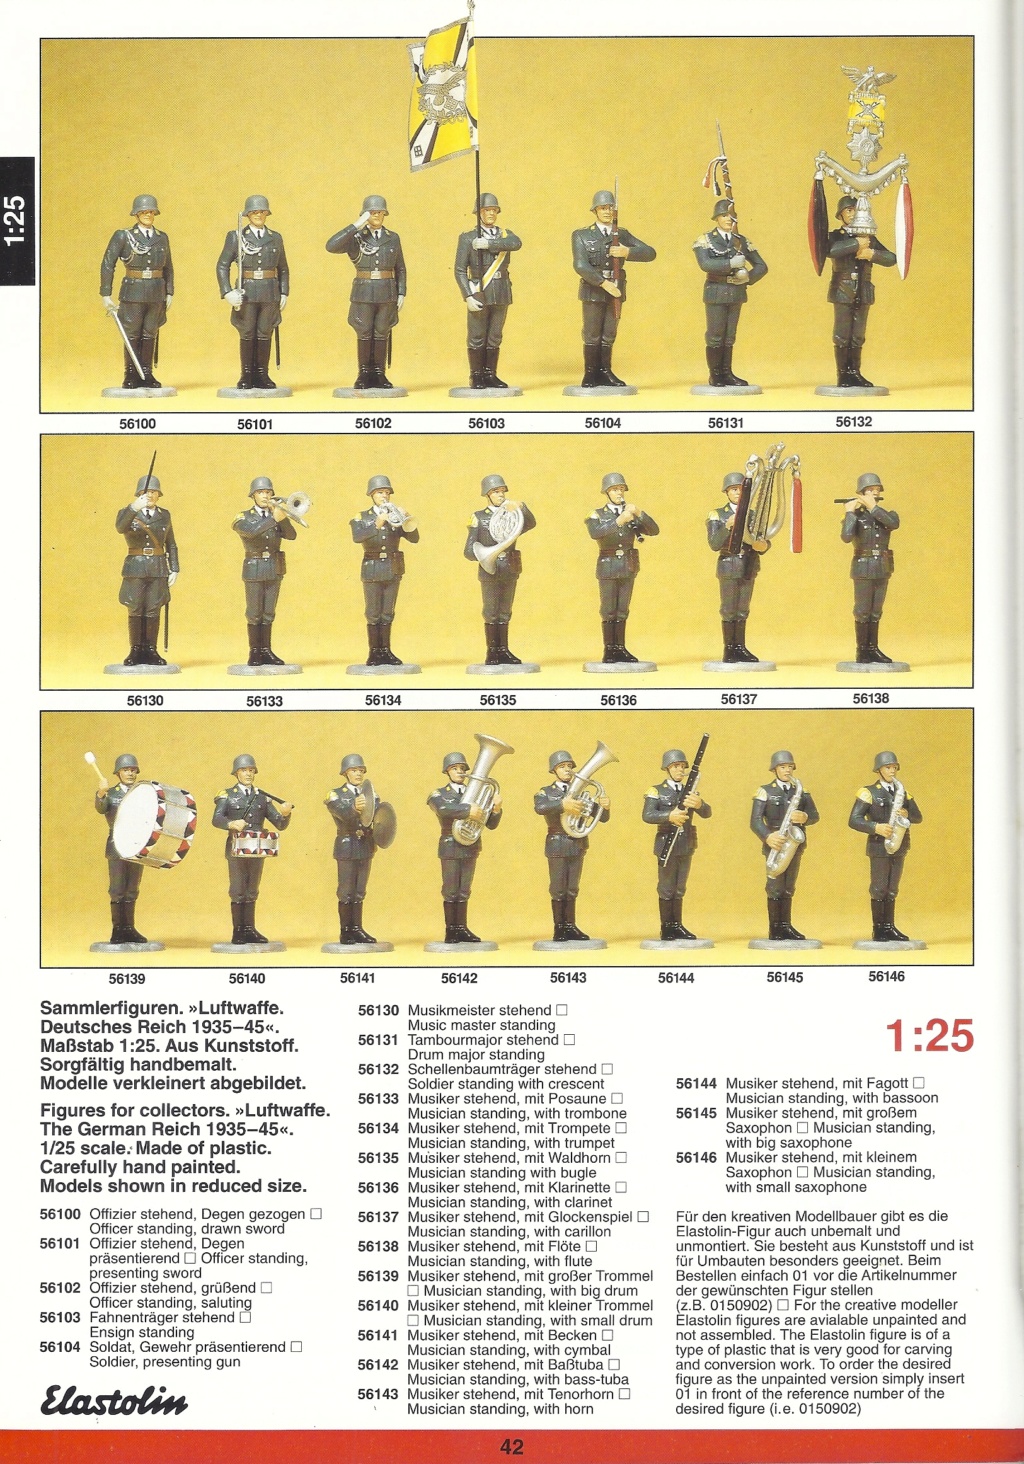 [PREISER 1996] Catalogue elastolin 1996 Preis185